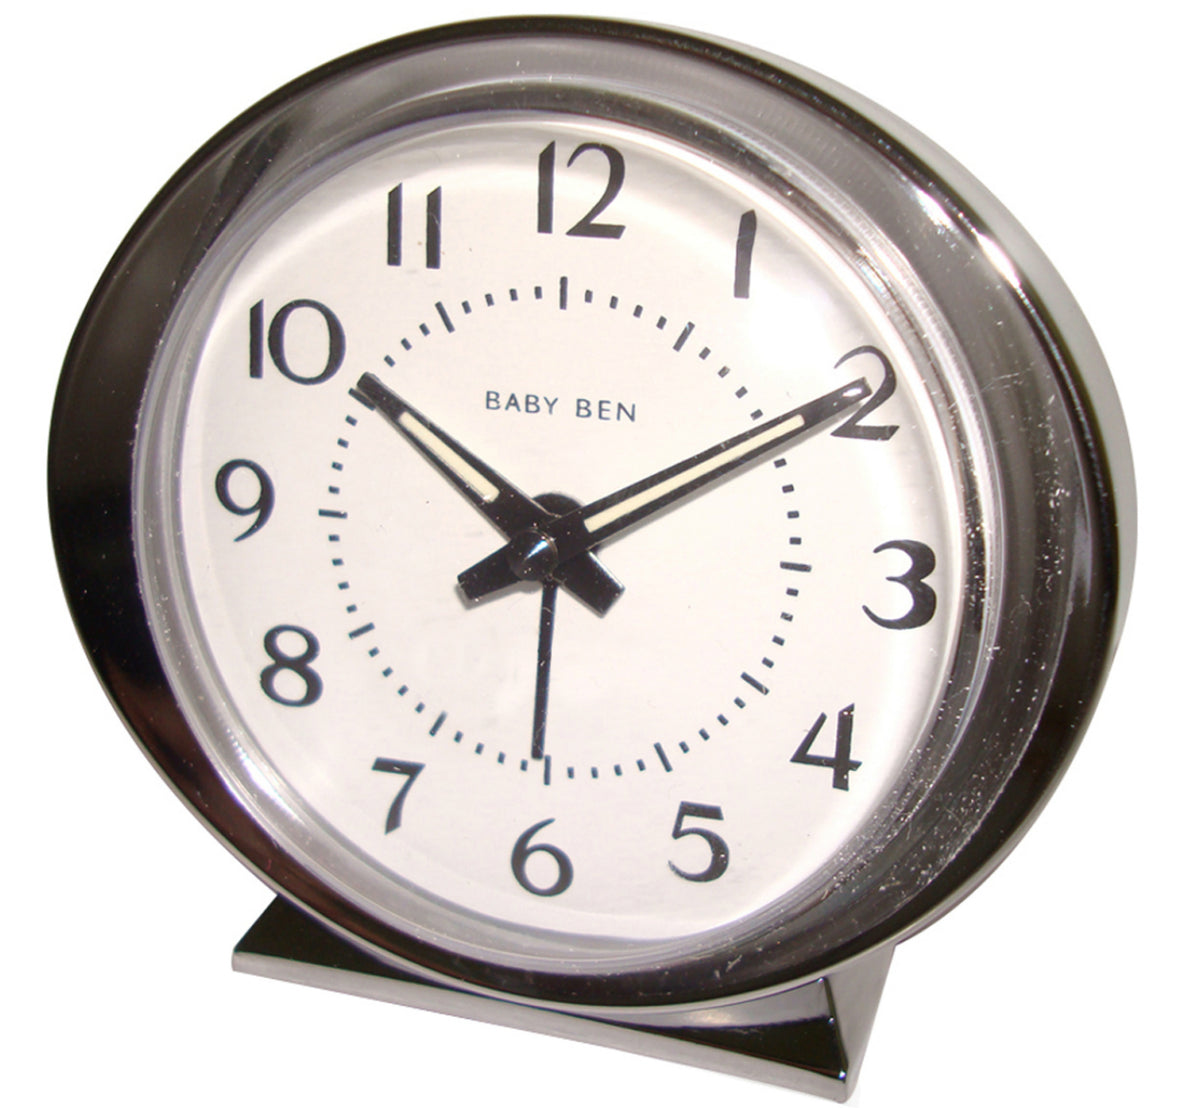 buy clocks & timers at cheap rate in bulk. wholesale & retail home clocks & shelving store.